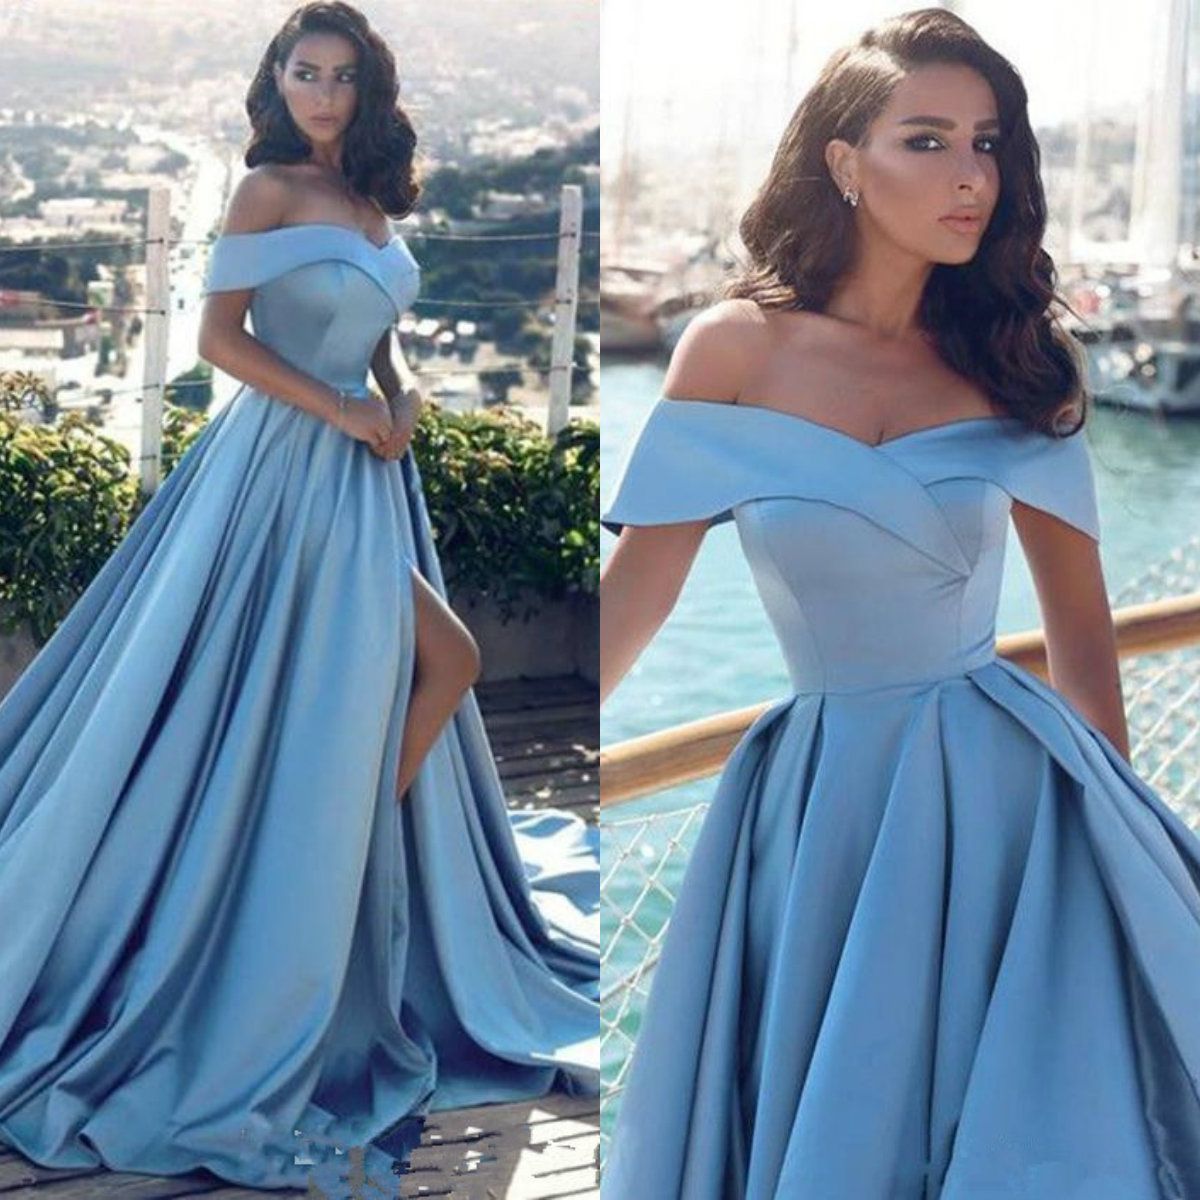 light blue sweetheart dress